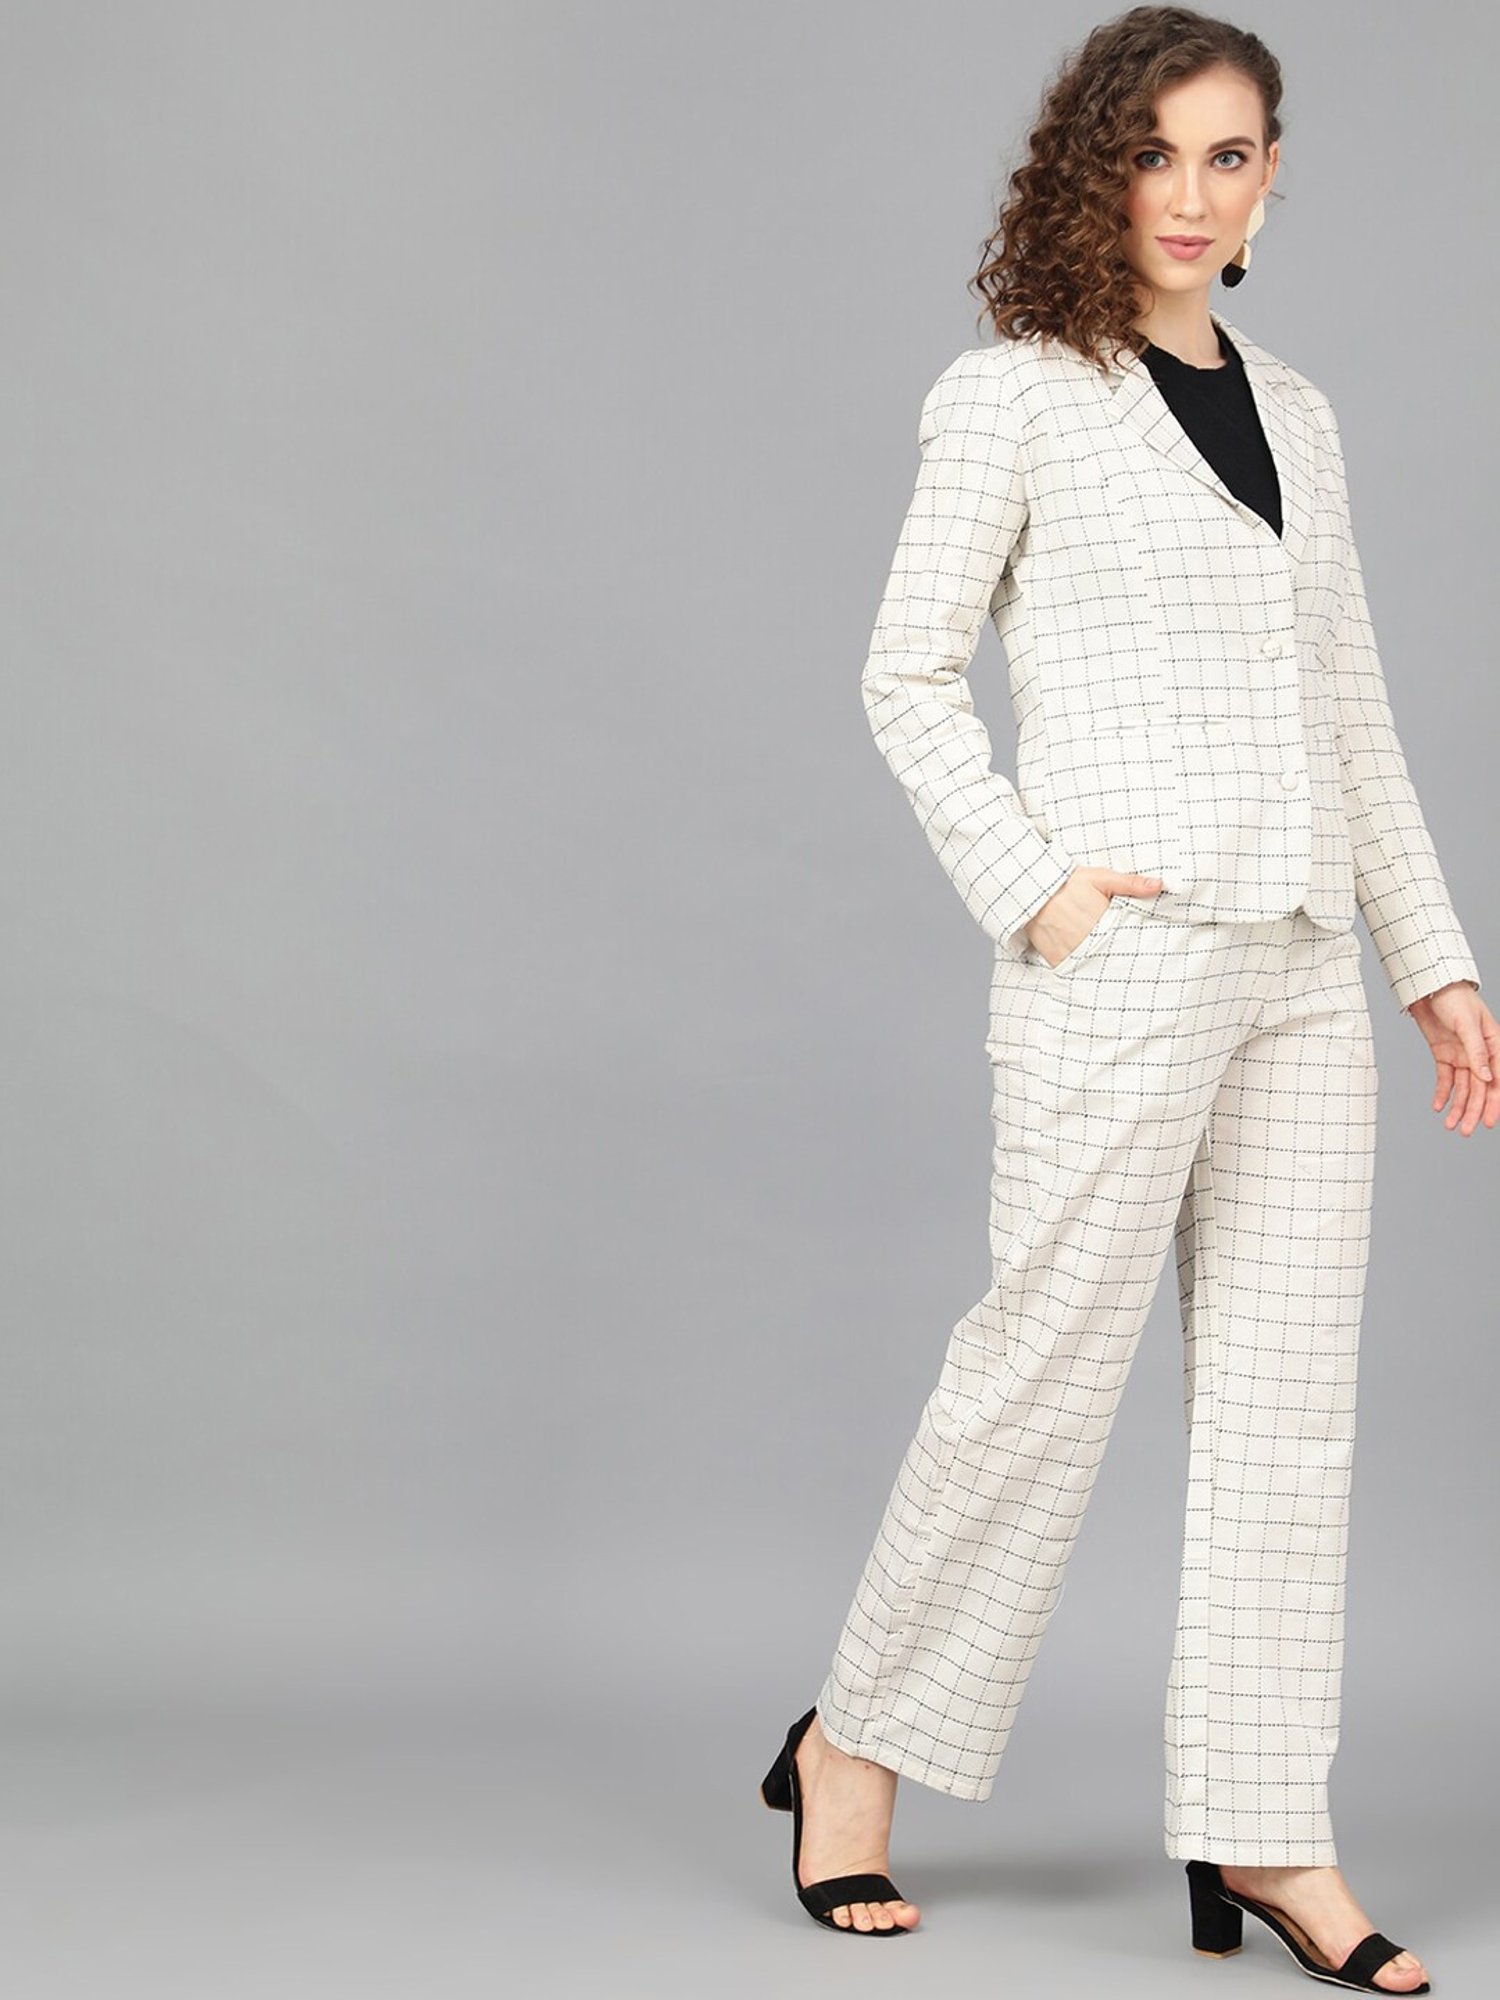 10 Women trouser suit ideas  ladies trouser suits business casual  outfits fashion